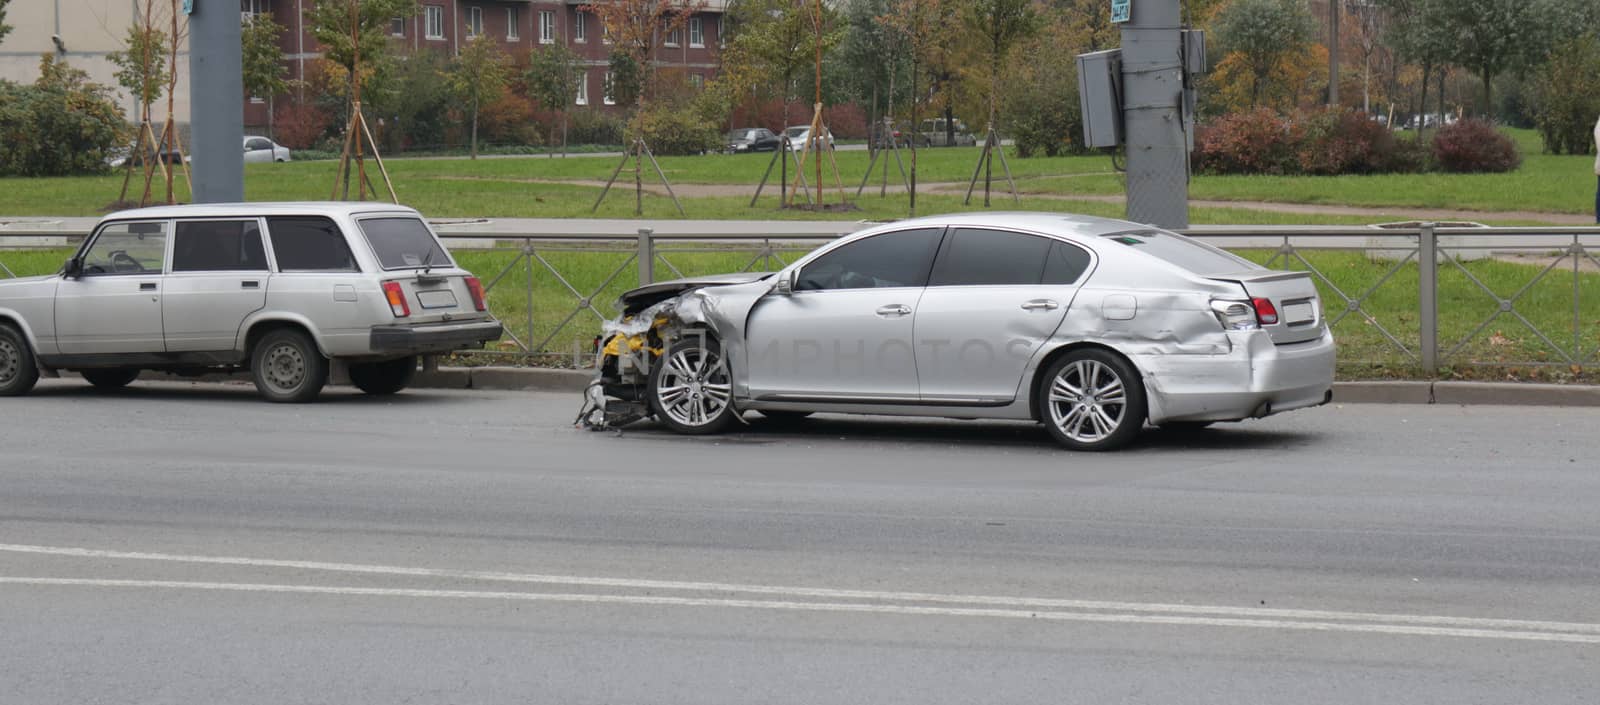 November 28, 2016 St. Petersburg, Russia, accident Lexus crash while overtaking